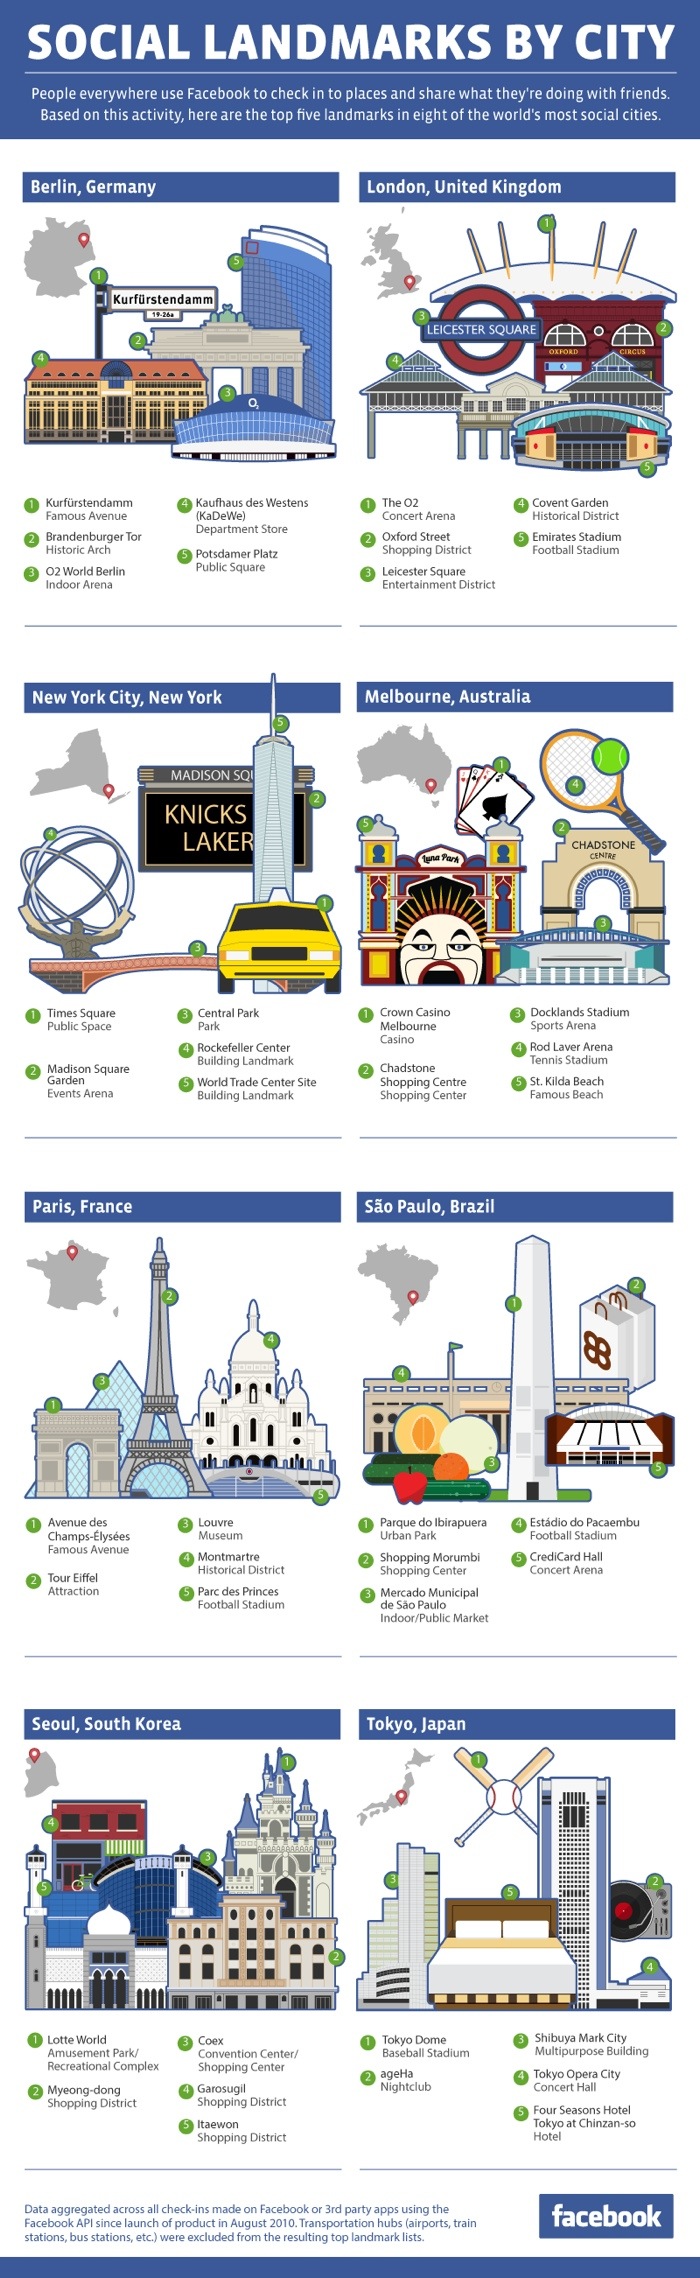 Facebook Social Landmarks by City